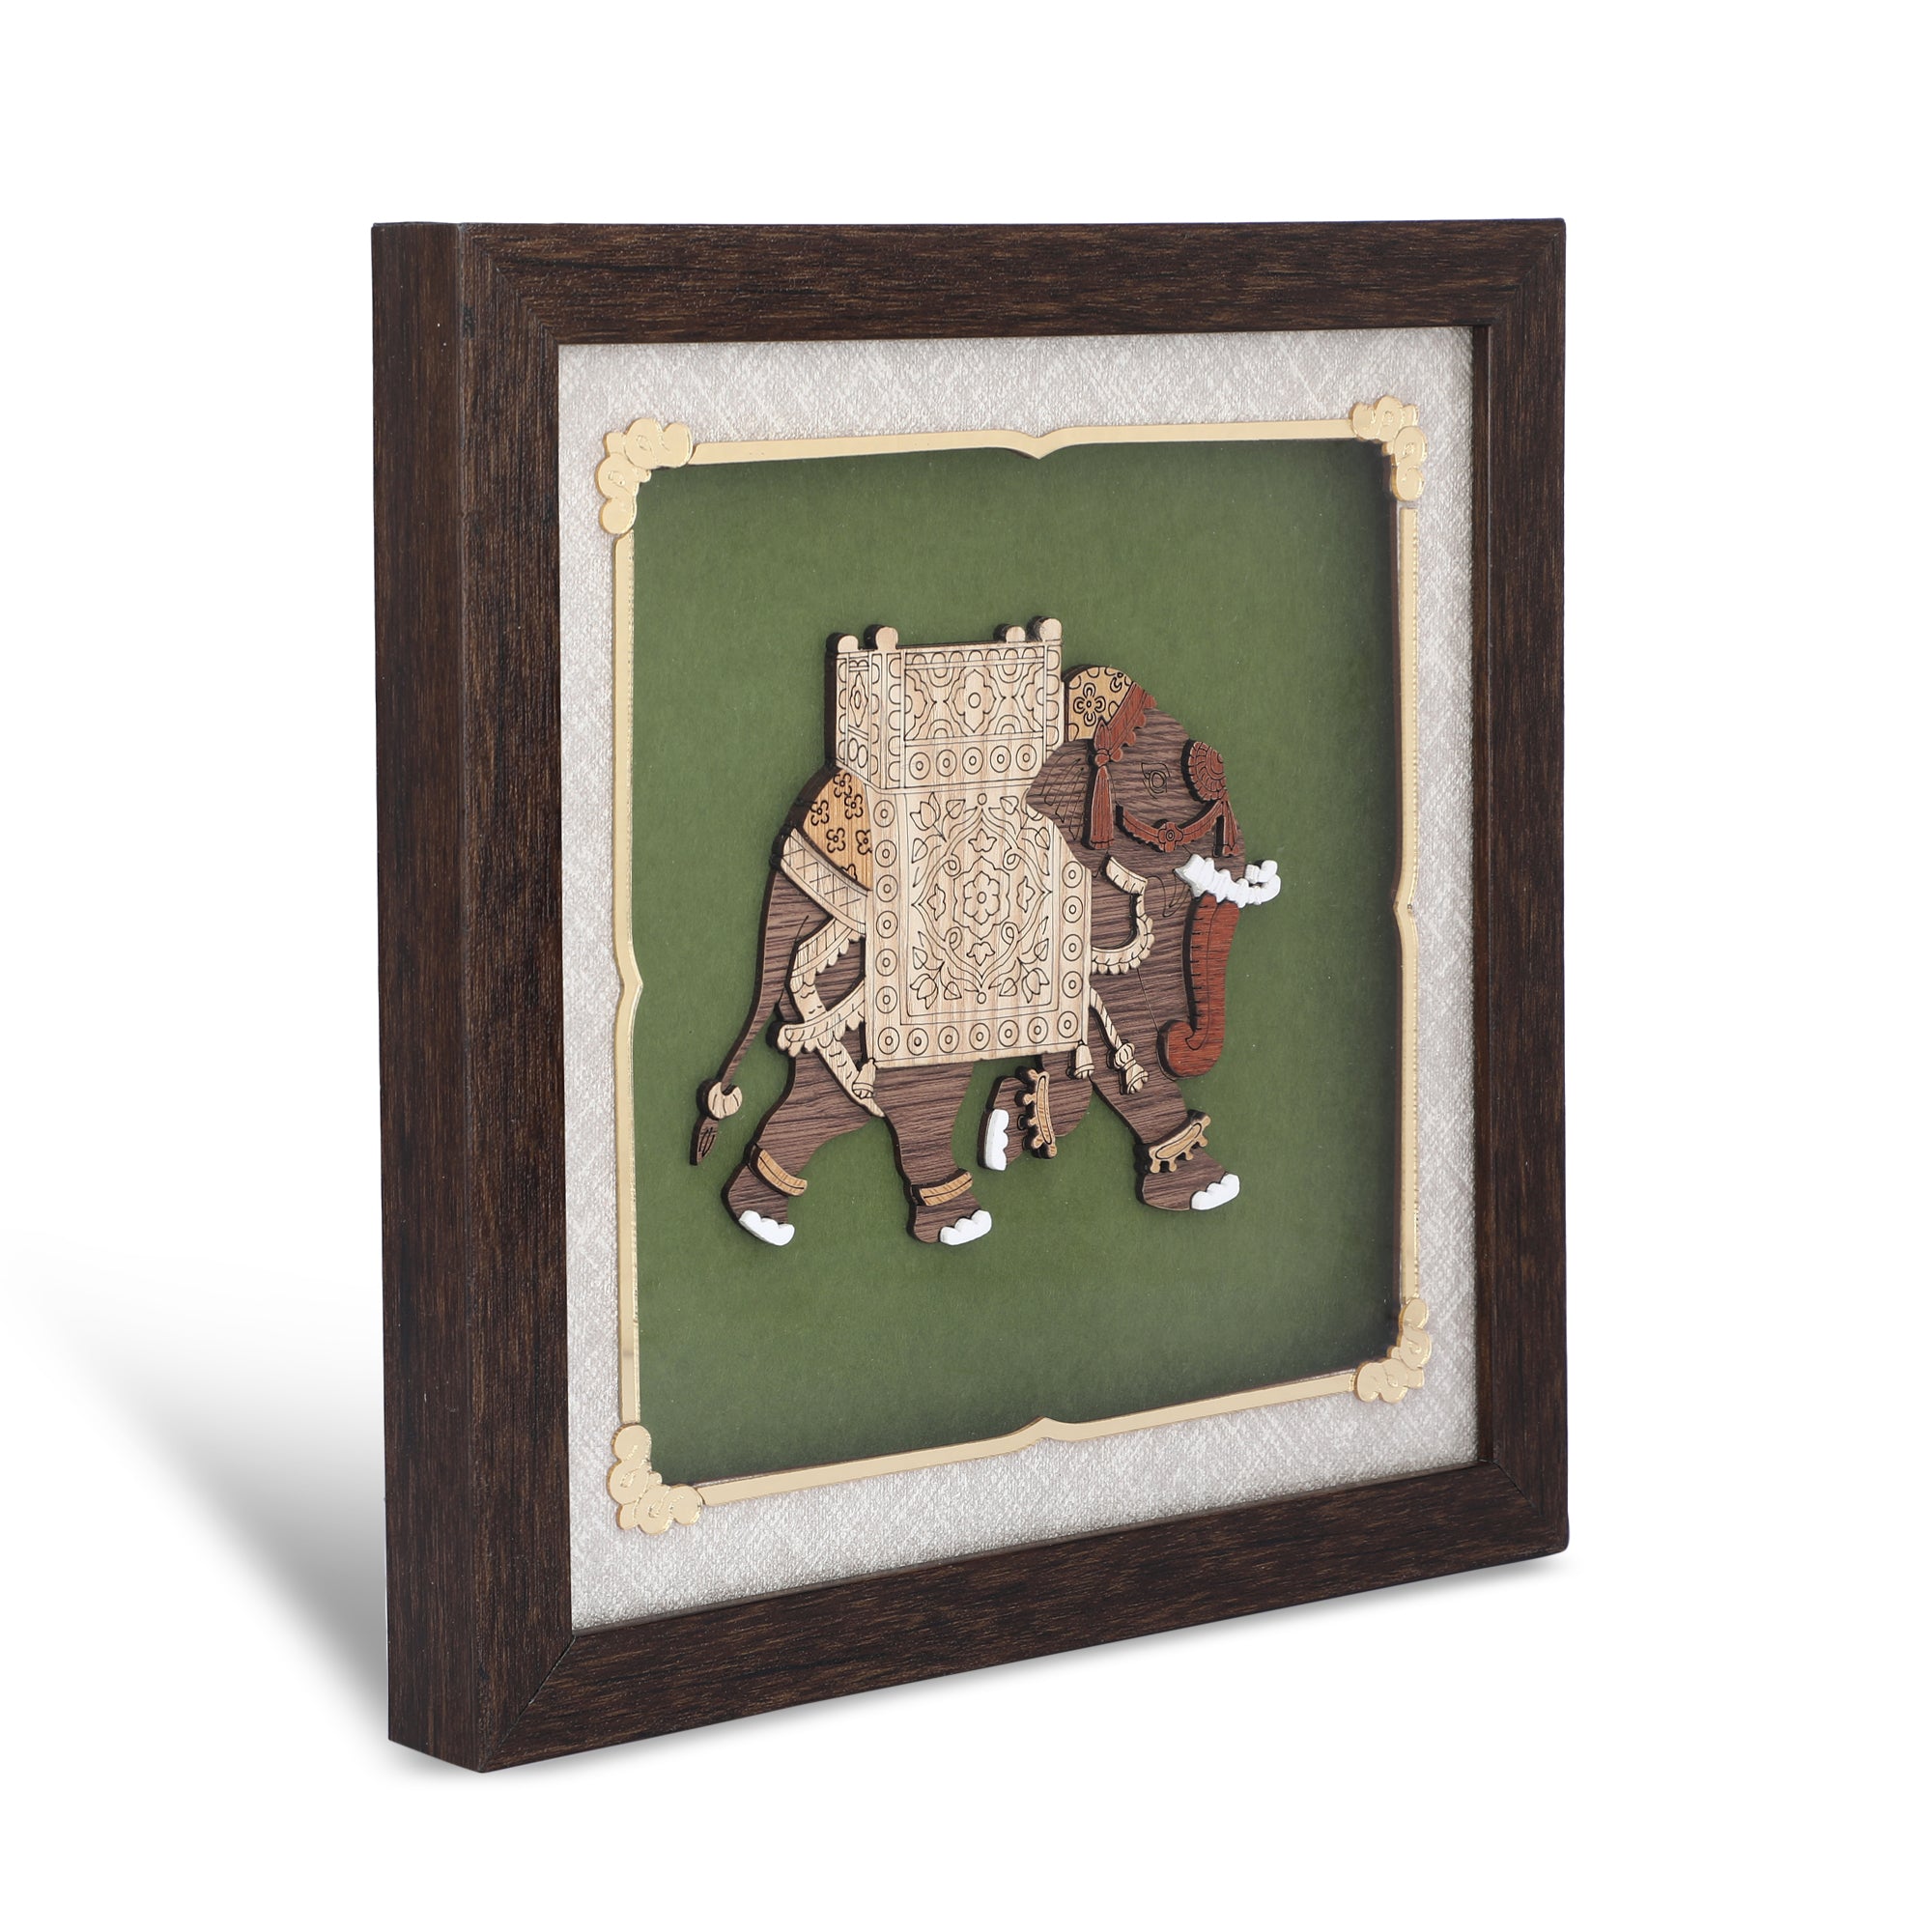 Royal Elephant - 3d Wooden Layer Frame